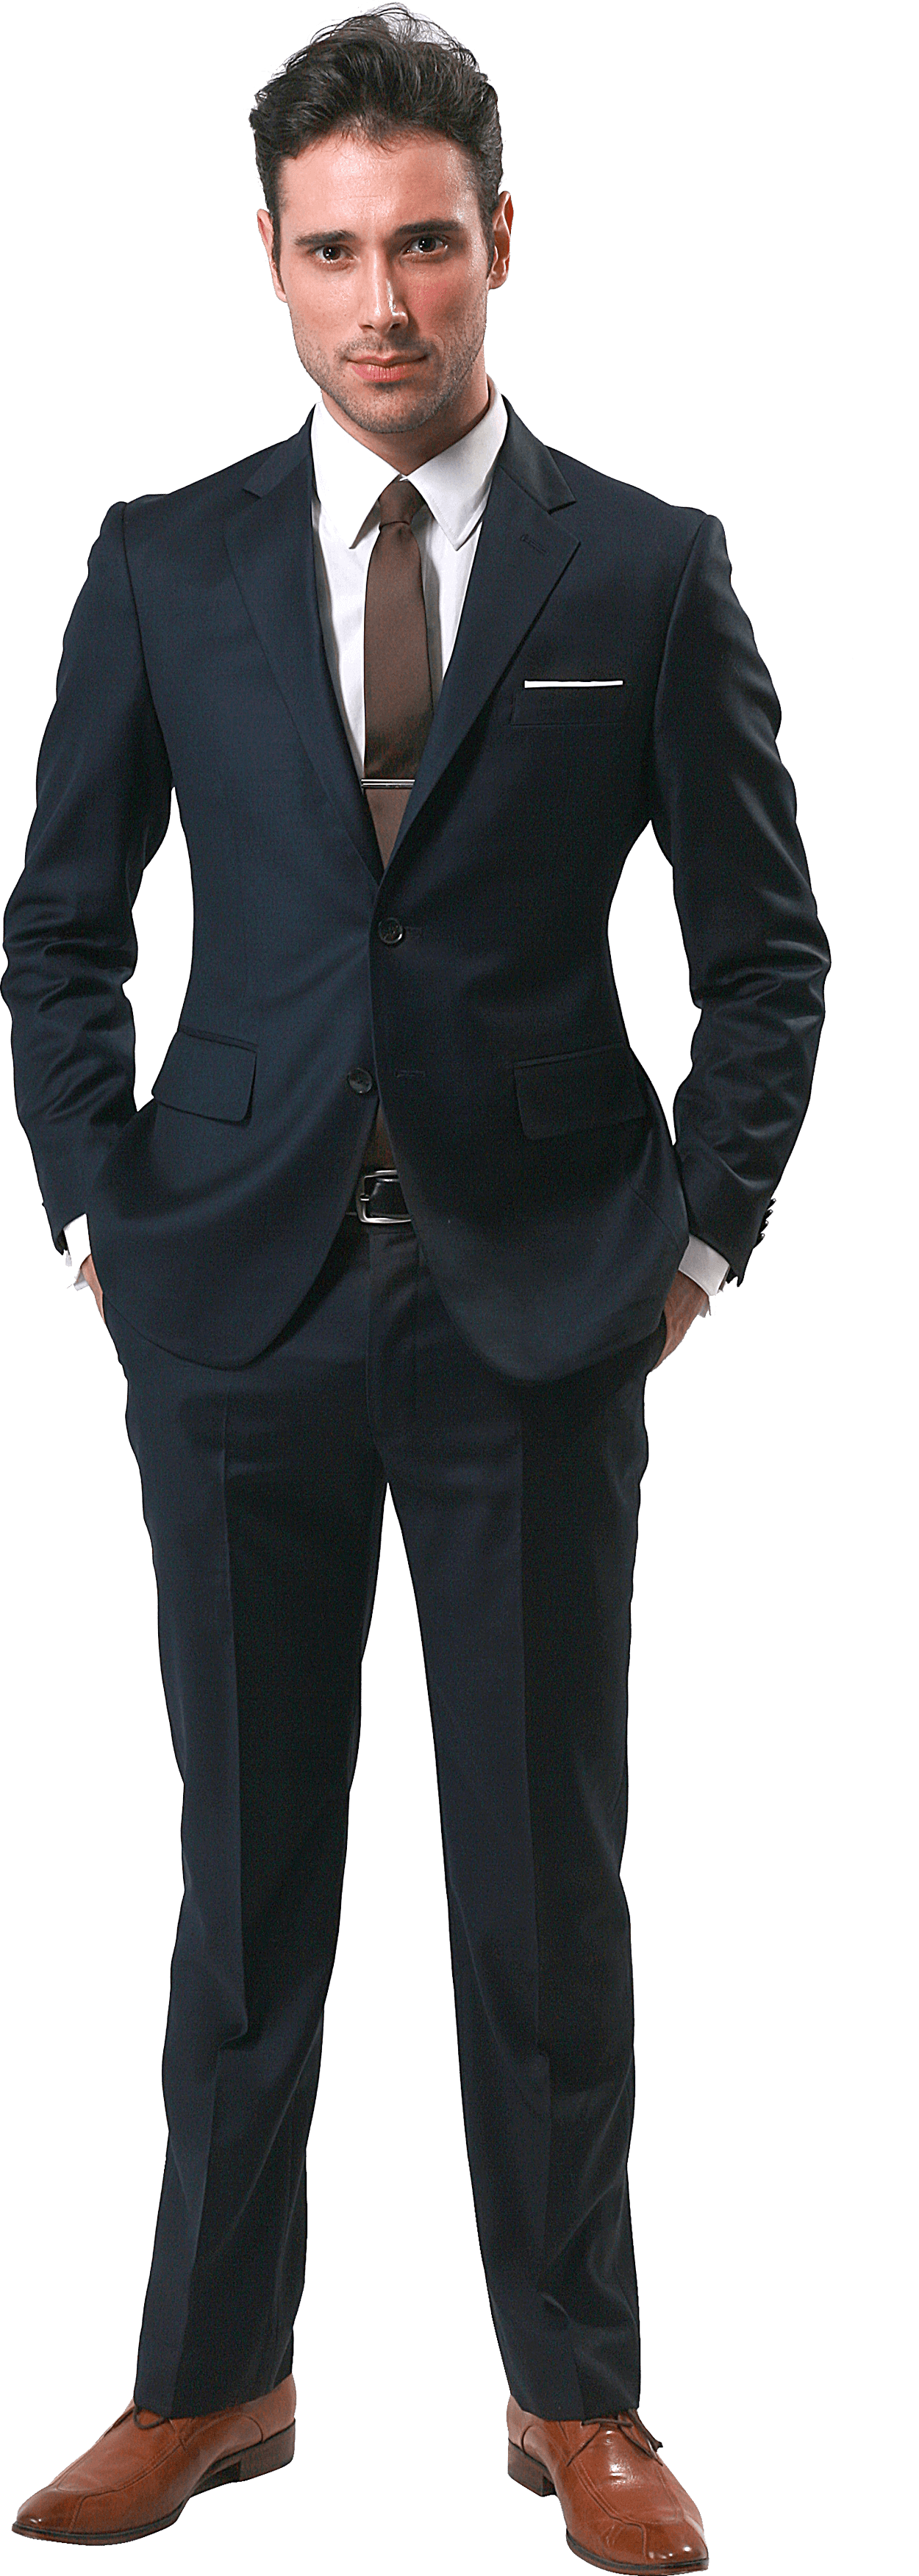 Suit Business Man Standing Png Clipart Png Mart - vrogue.co